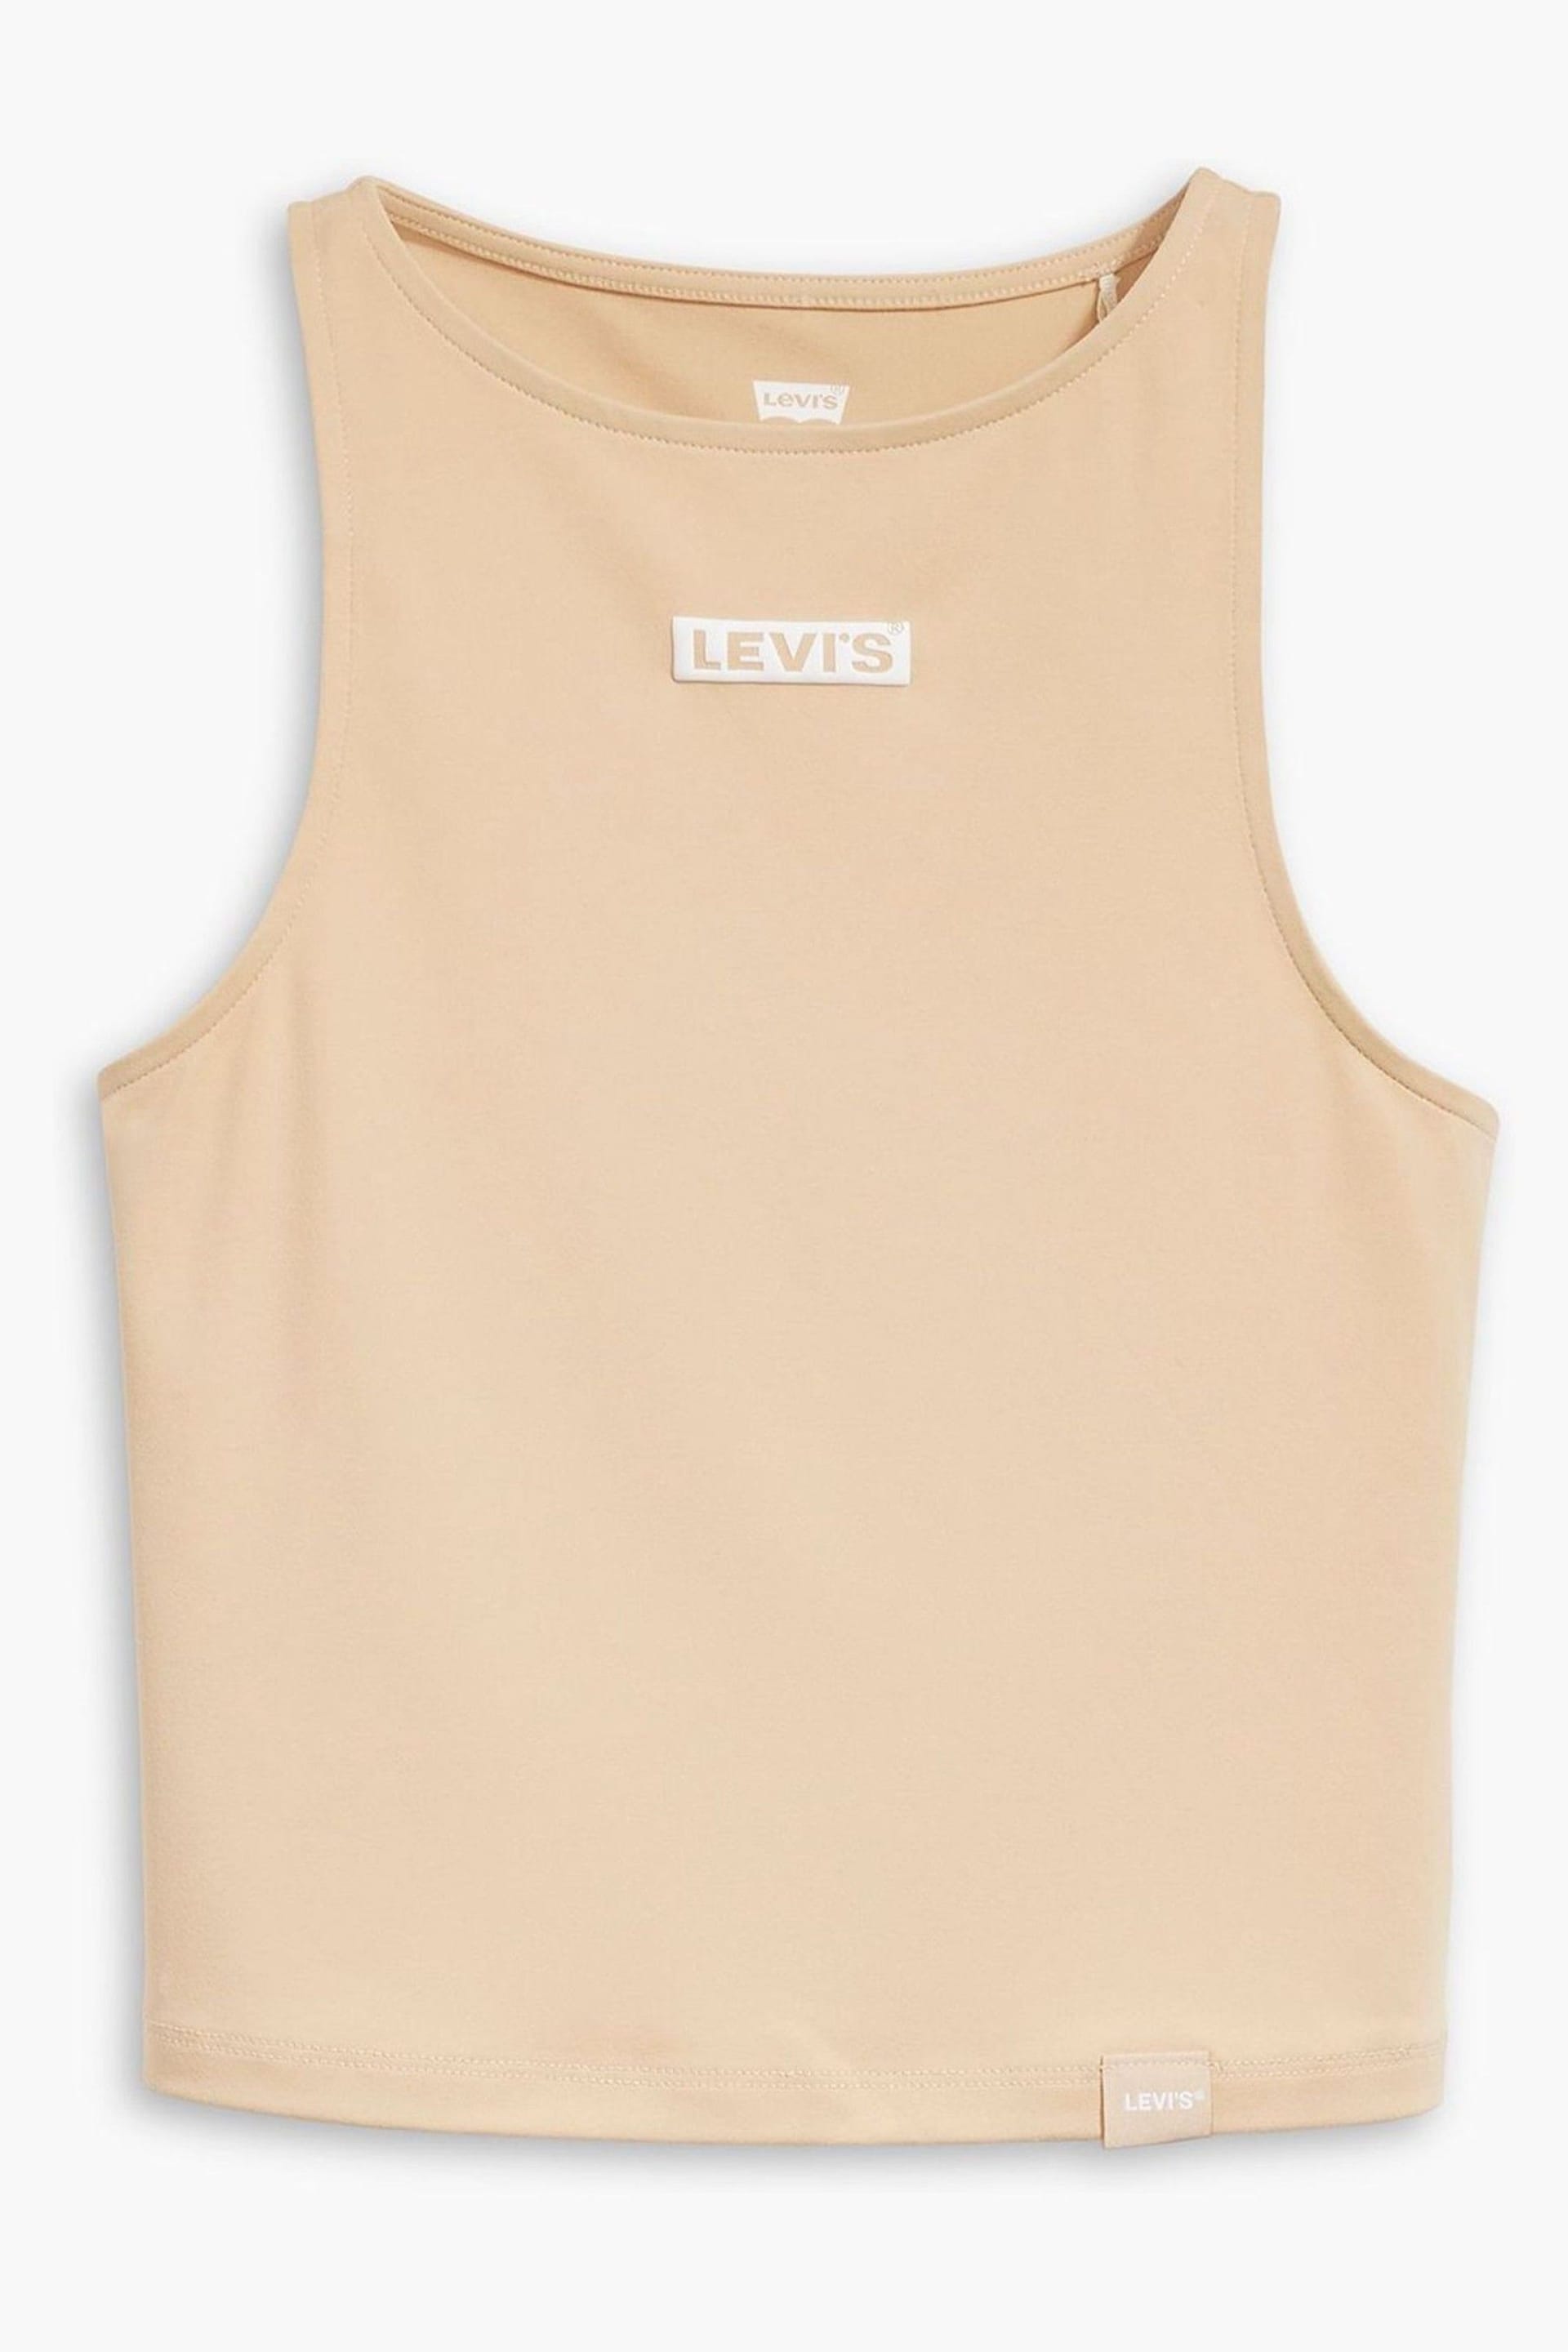 Levi's® Tan Brown High Neck Logo Vest - Image 3 of 5